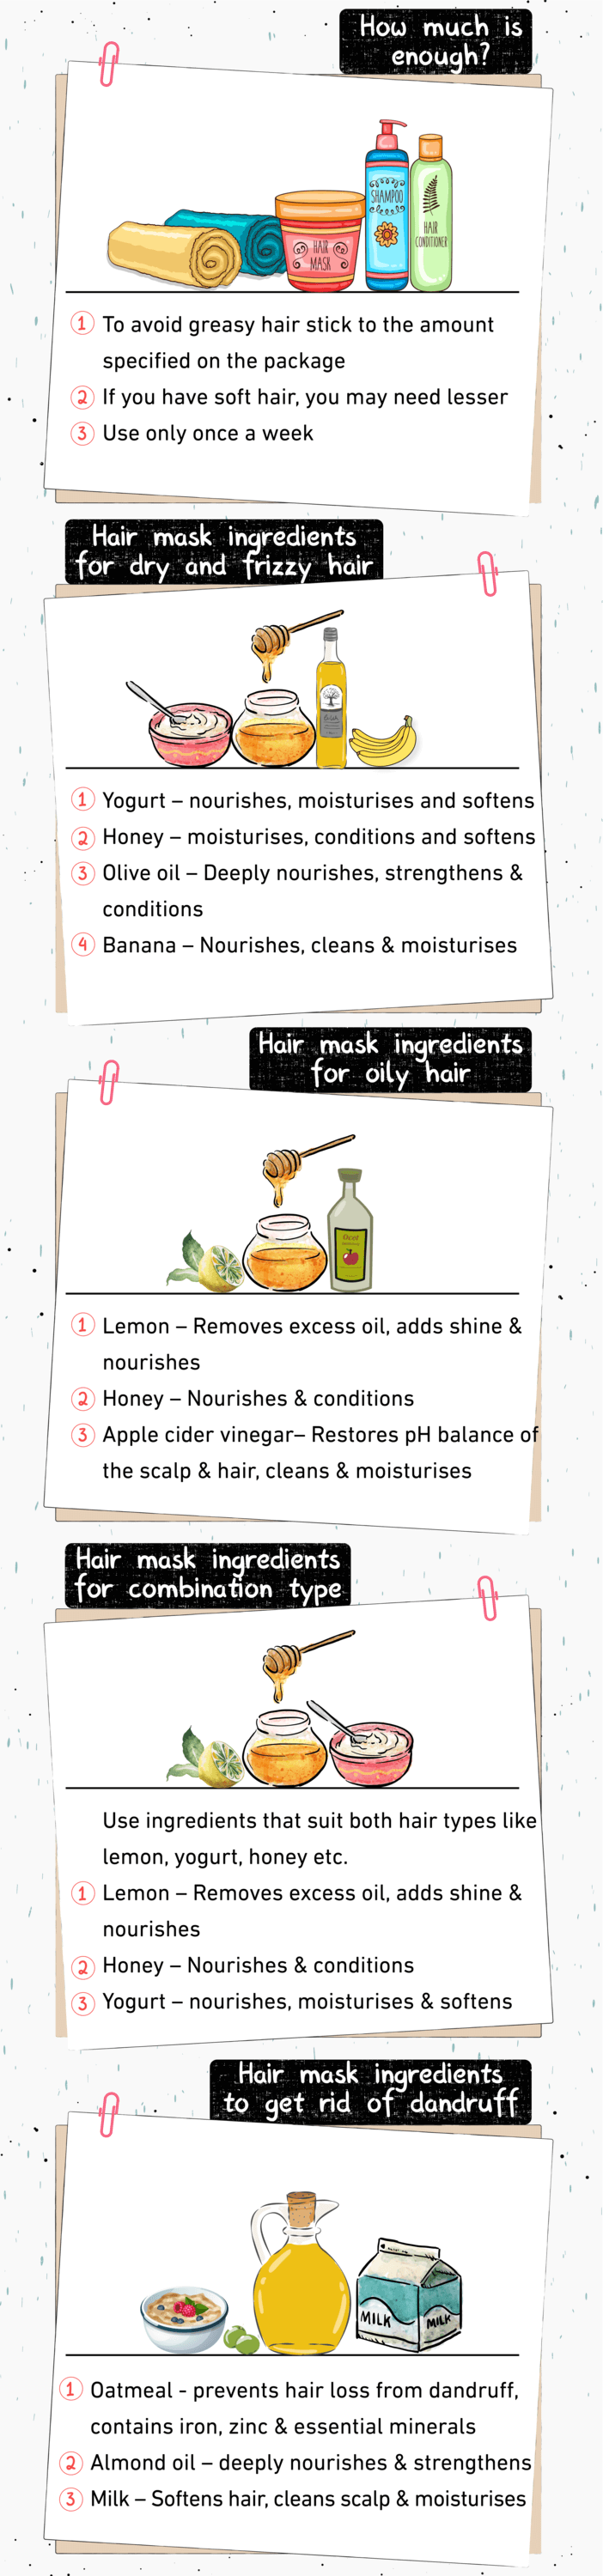 Ingredients for DIY hair mask